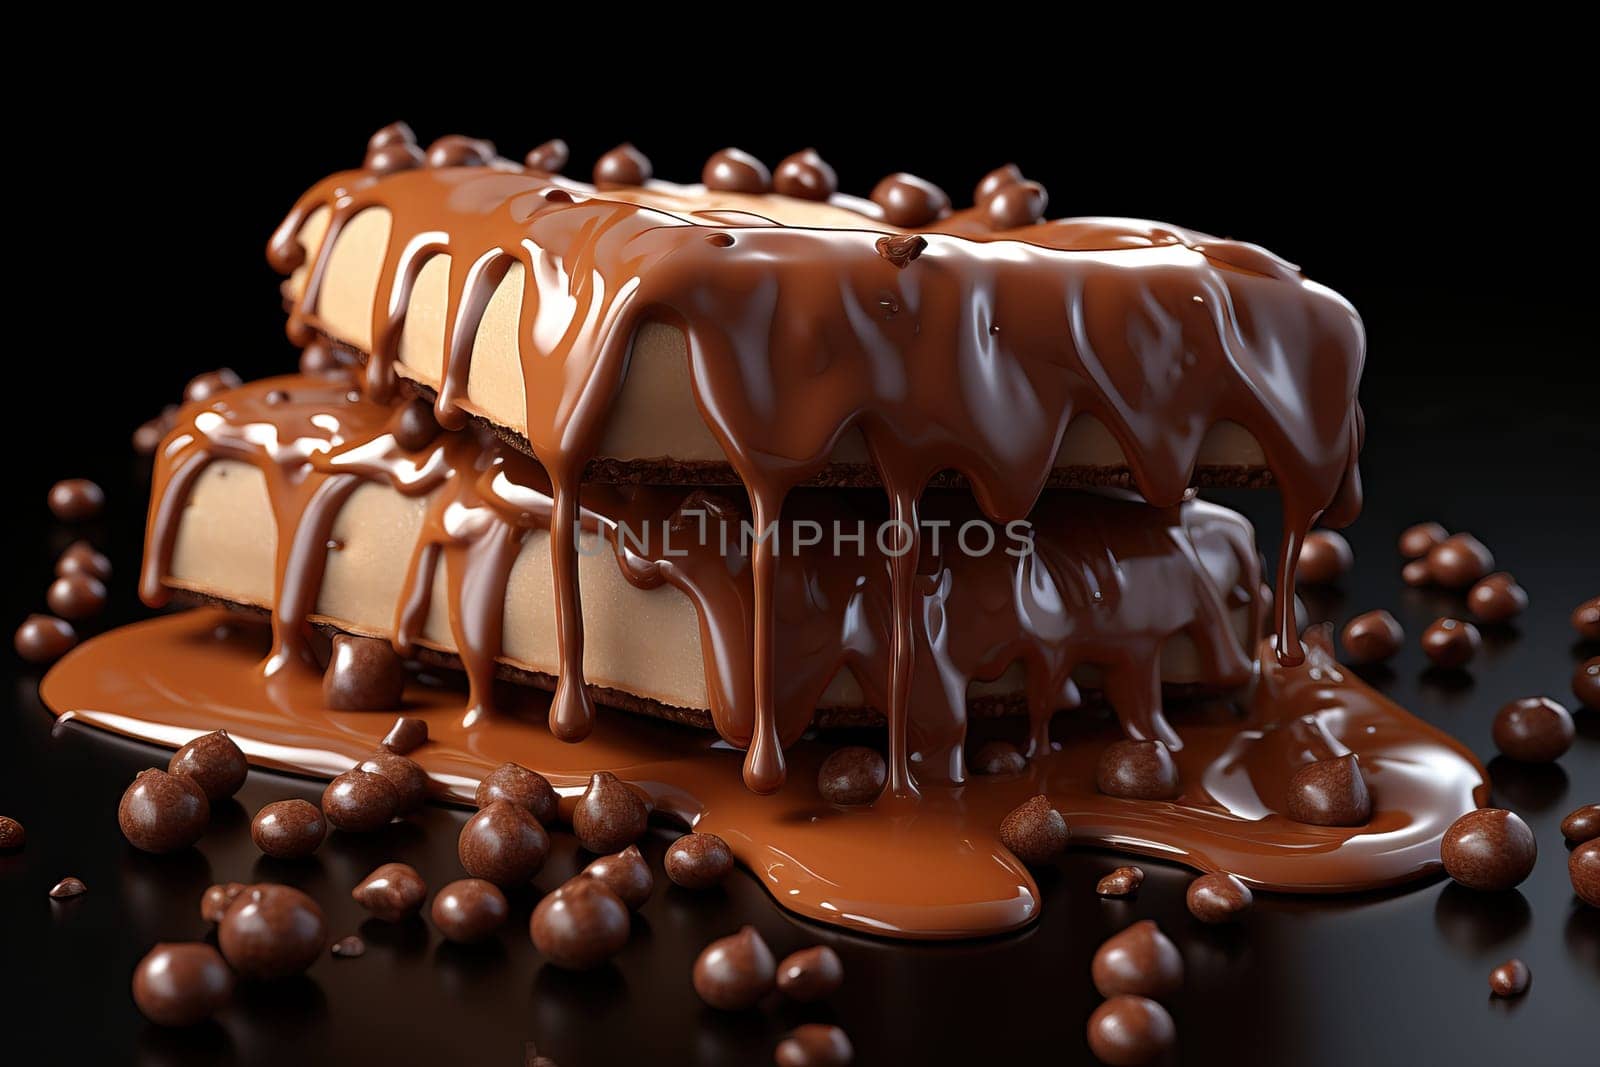 Semi-melted chocolate splashes on black background, melted chocolate close-up.